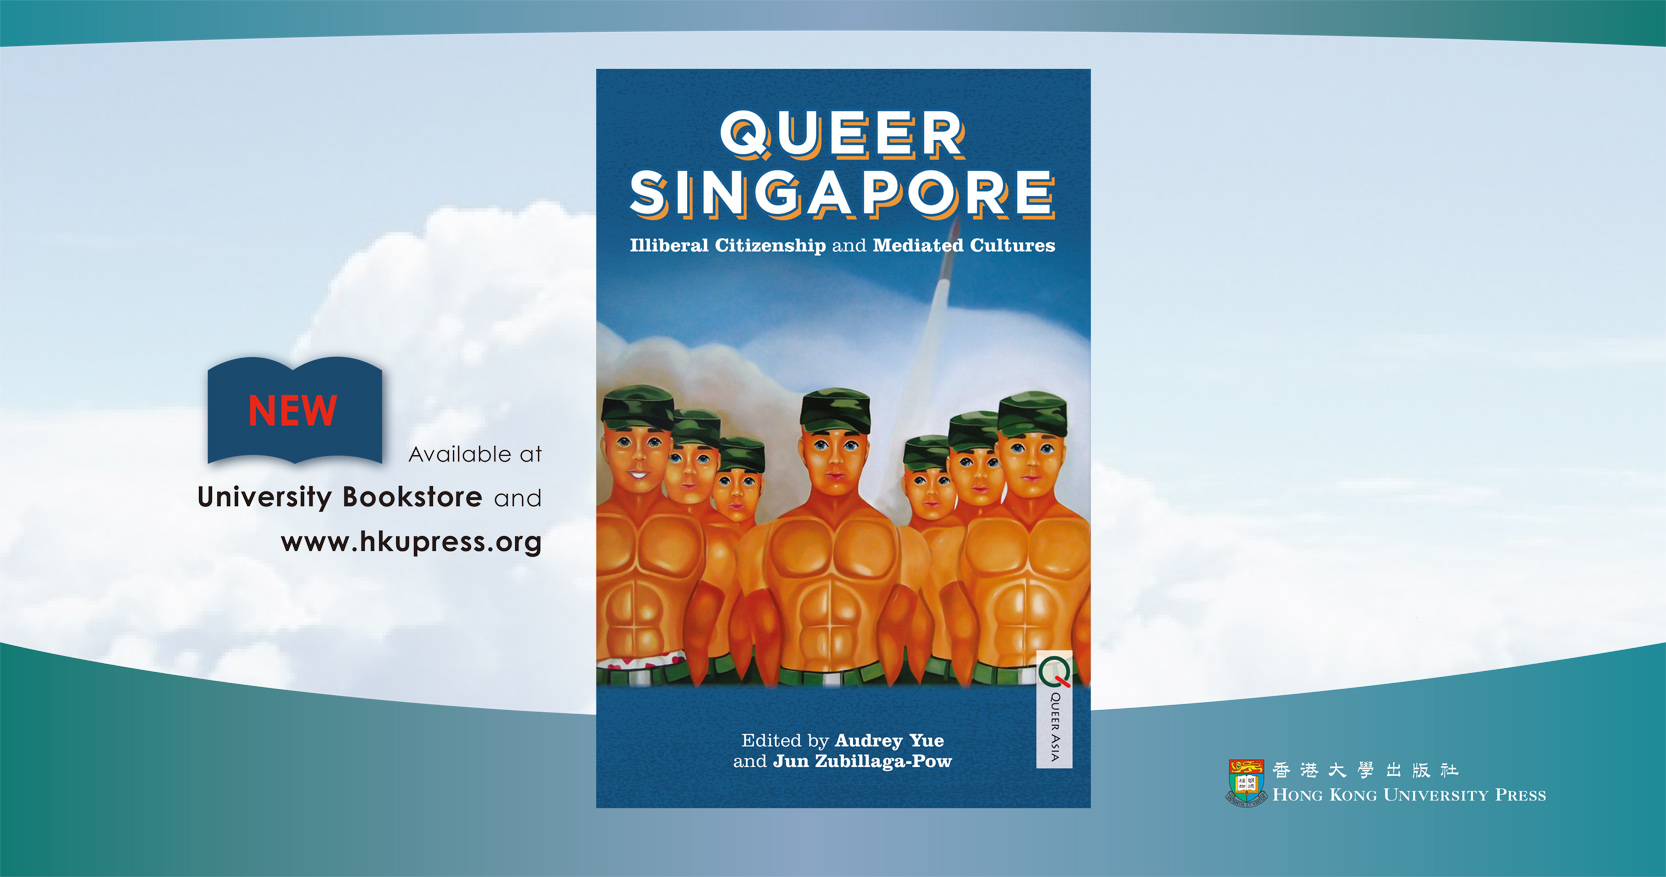 New Book! More info: www.hkupress.org